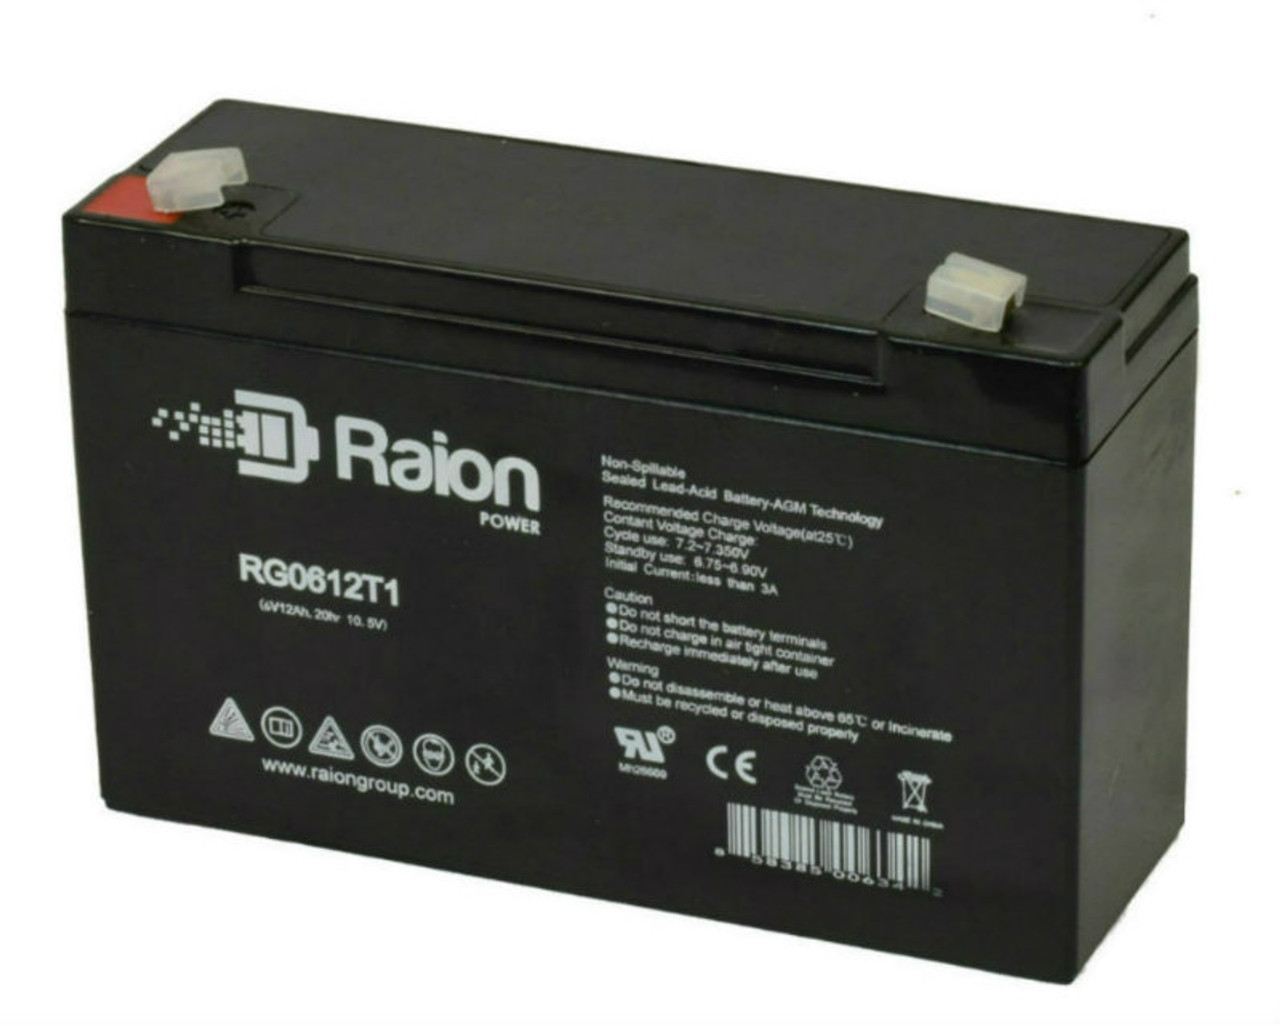 Raion Power RG06120T1 Replacement Emergency Light Battery for Emergi-Lite 12CSM54